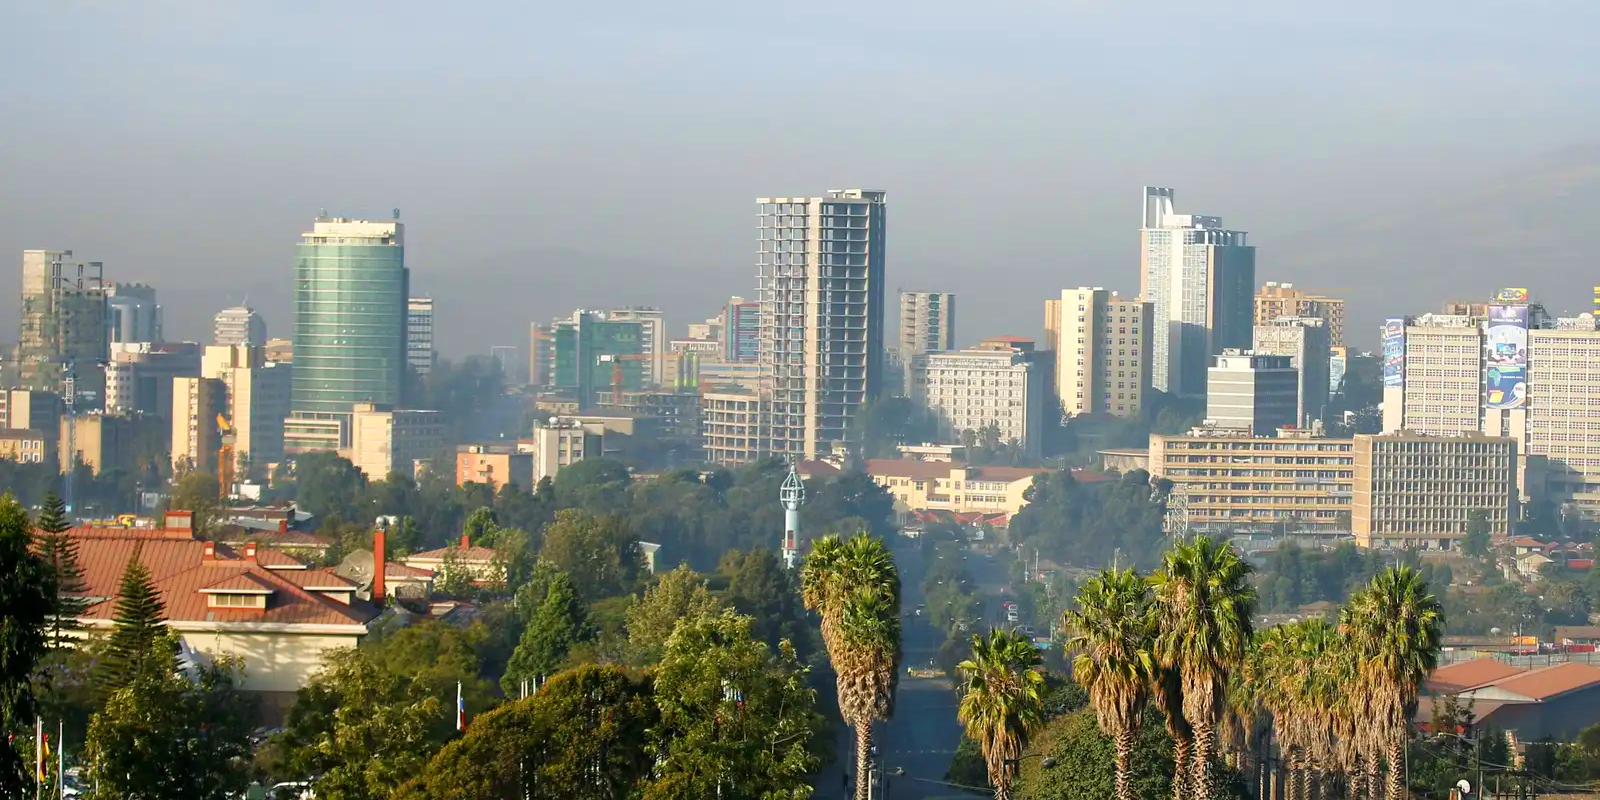 Addis Ababa - capital city of Ethiopia